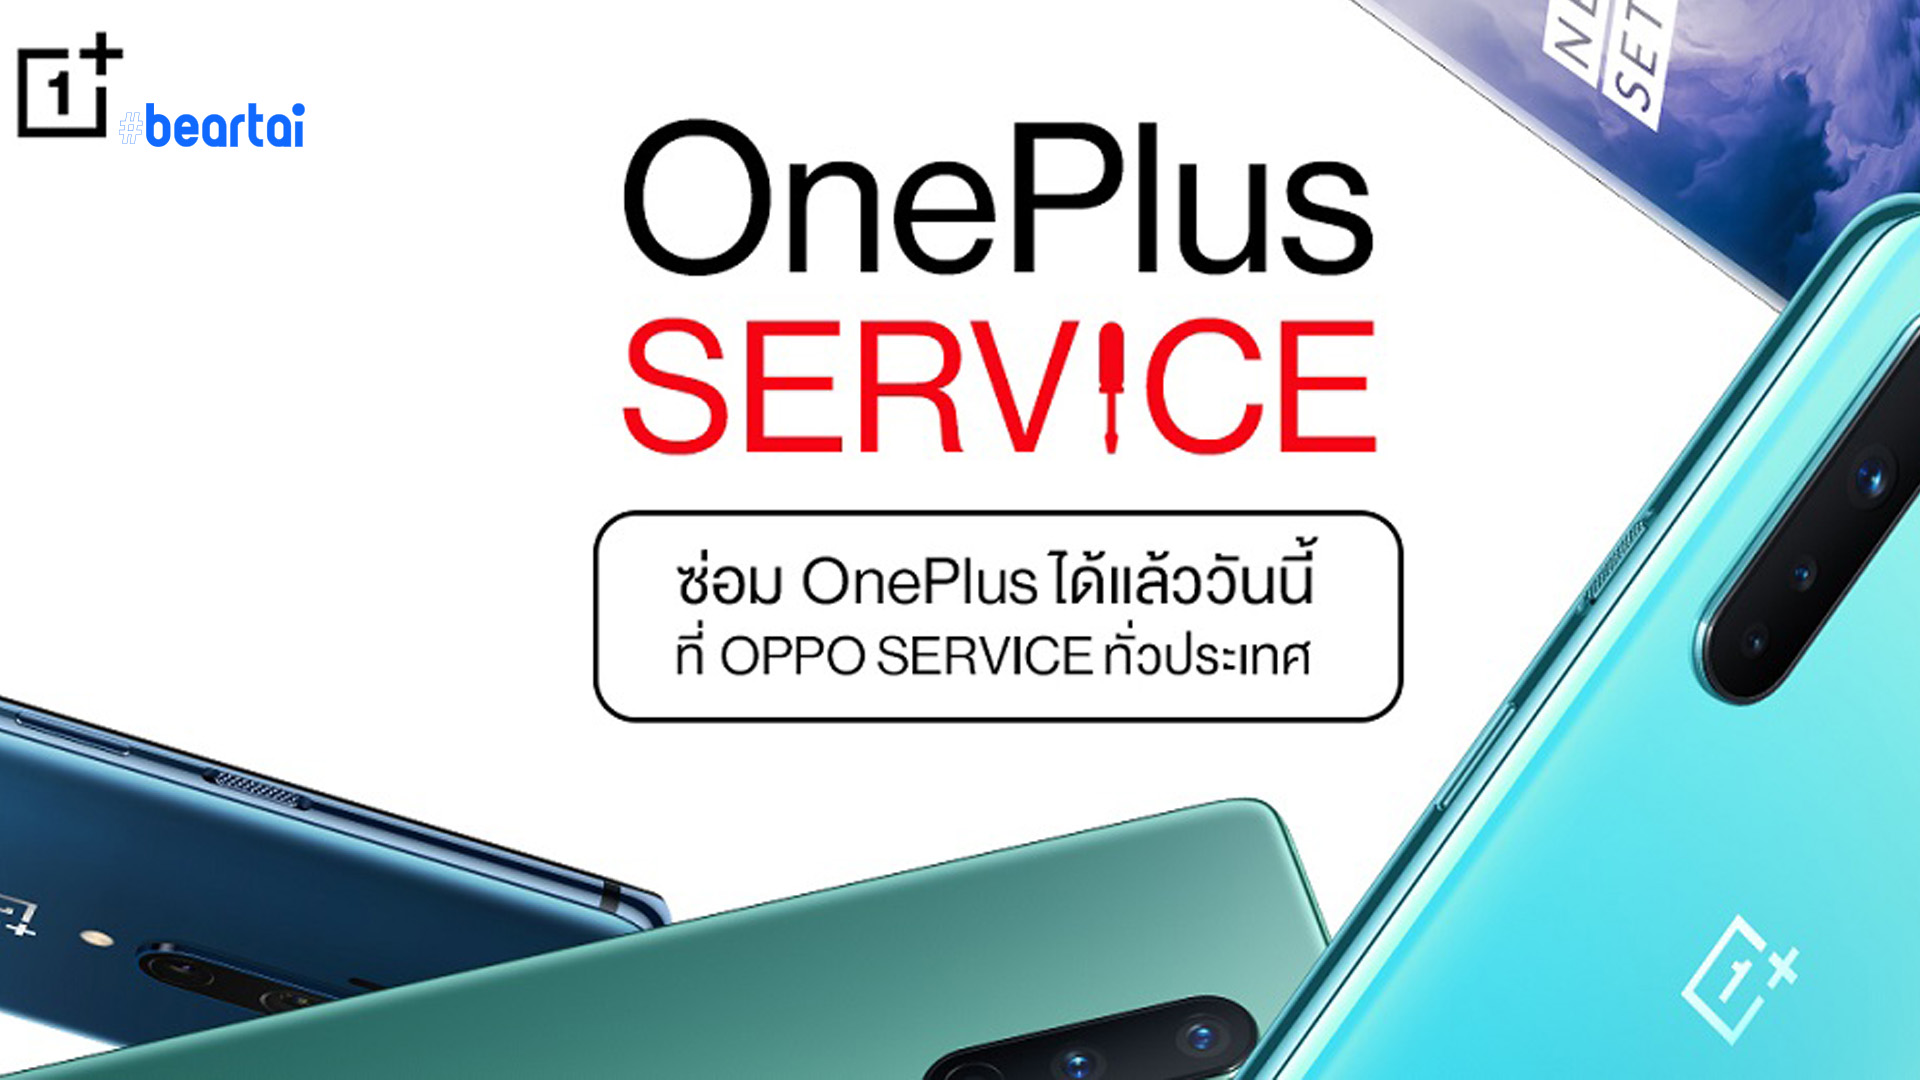 OnePlus ร่วมจับมือ OPPO เปิดใช้ศูนย์บริการ Service Center ได้แล้ววันนี้